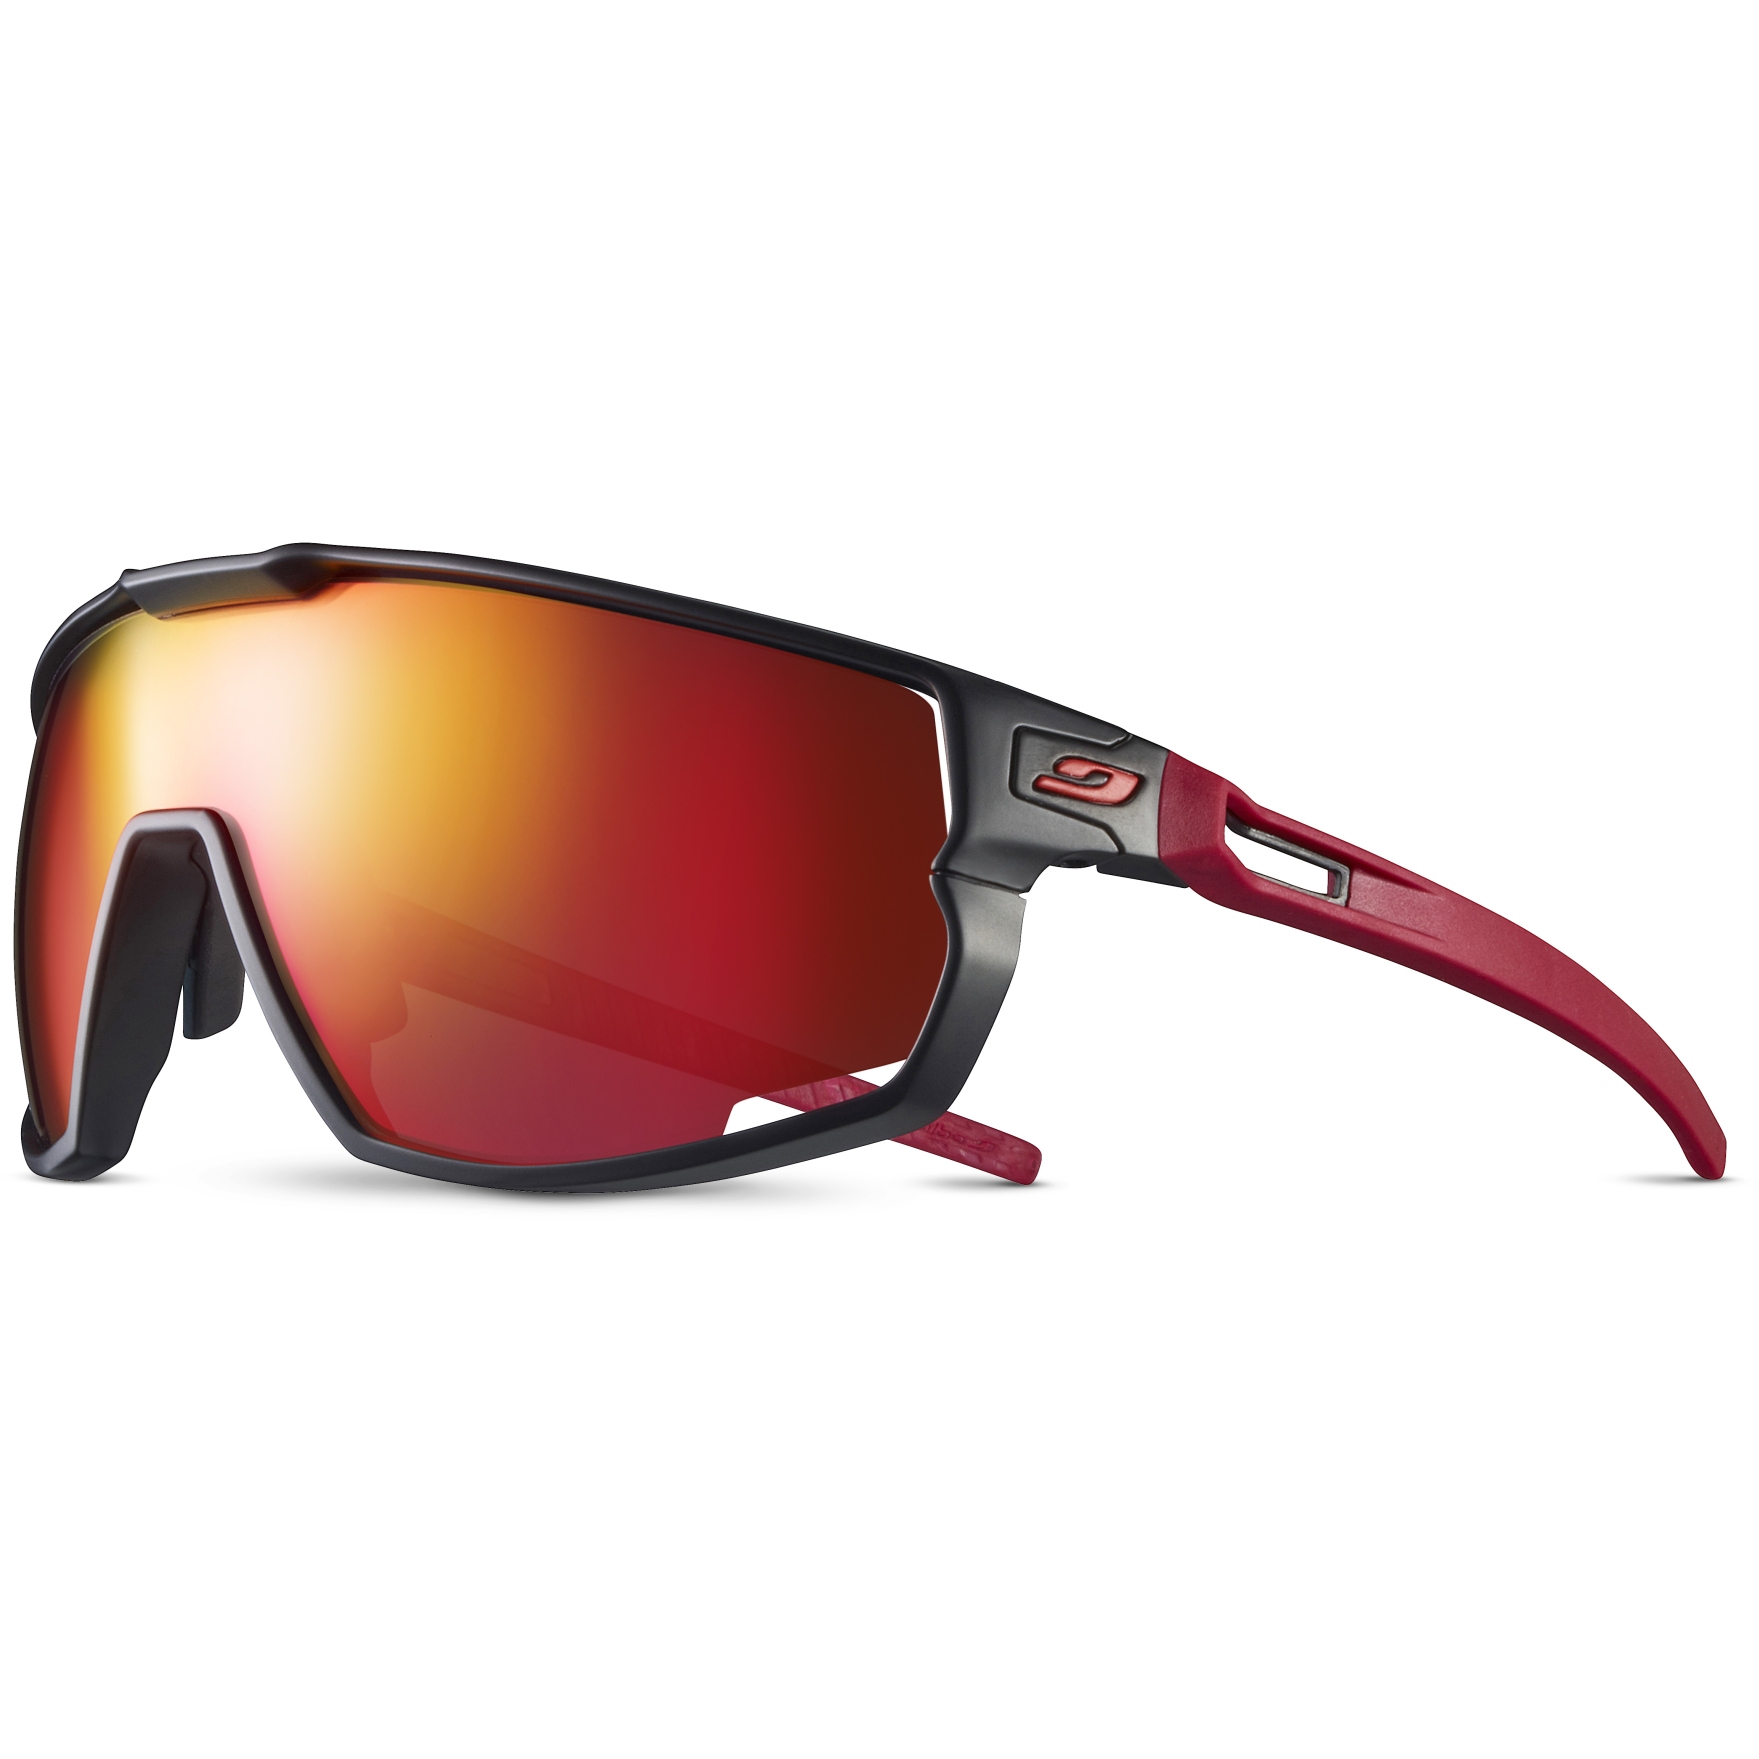 Productfoto van Julbo Rush Spectron 3 Sunglasses - matt black/red